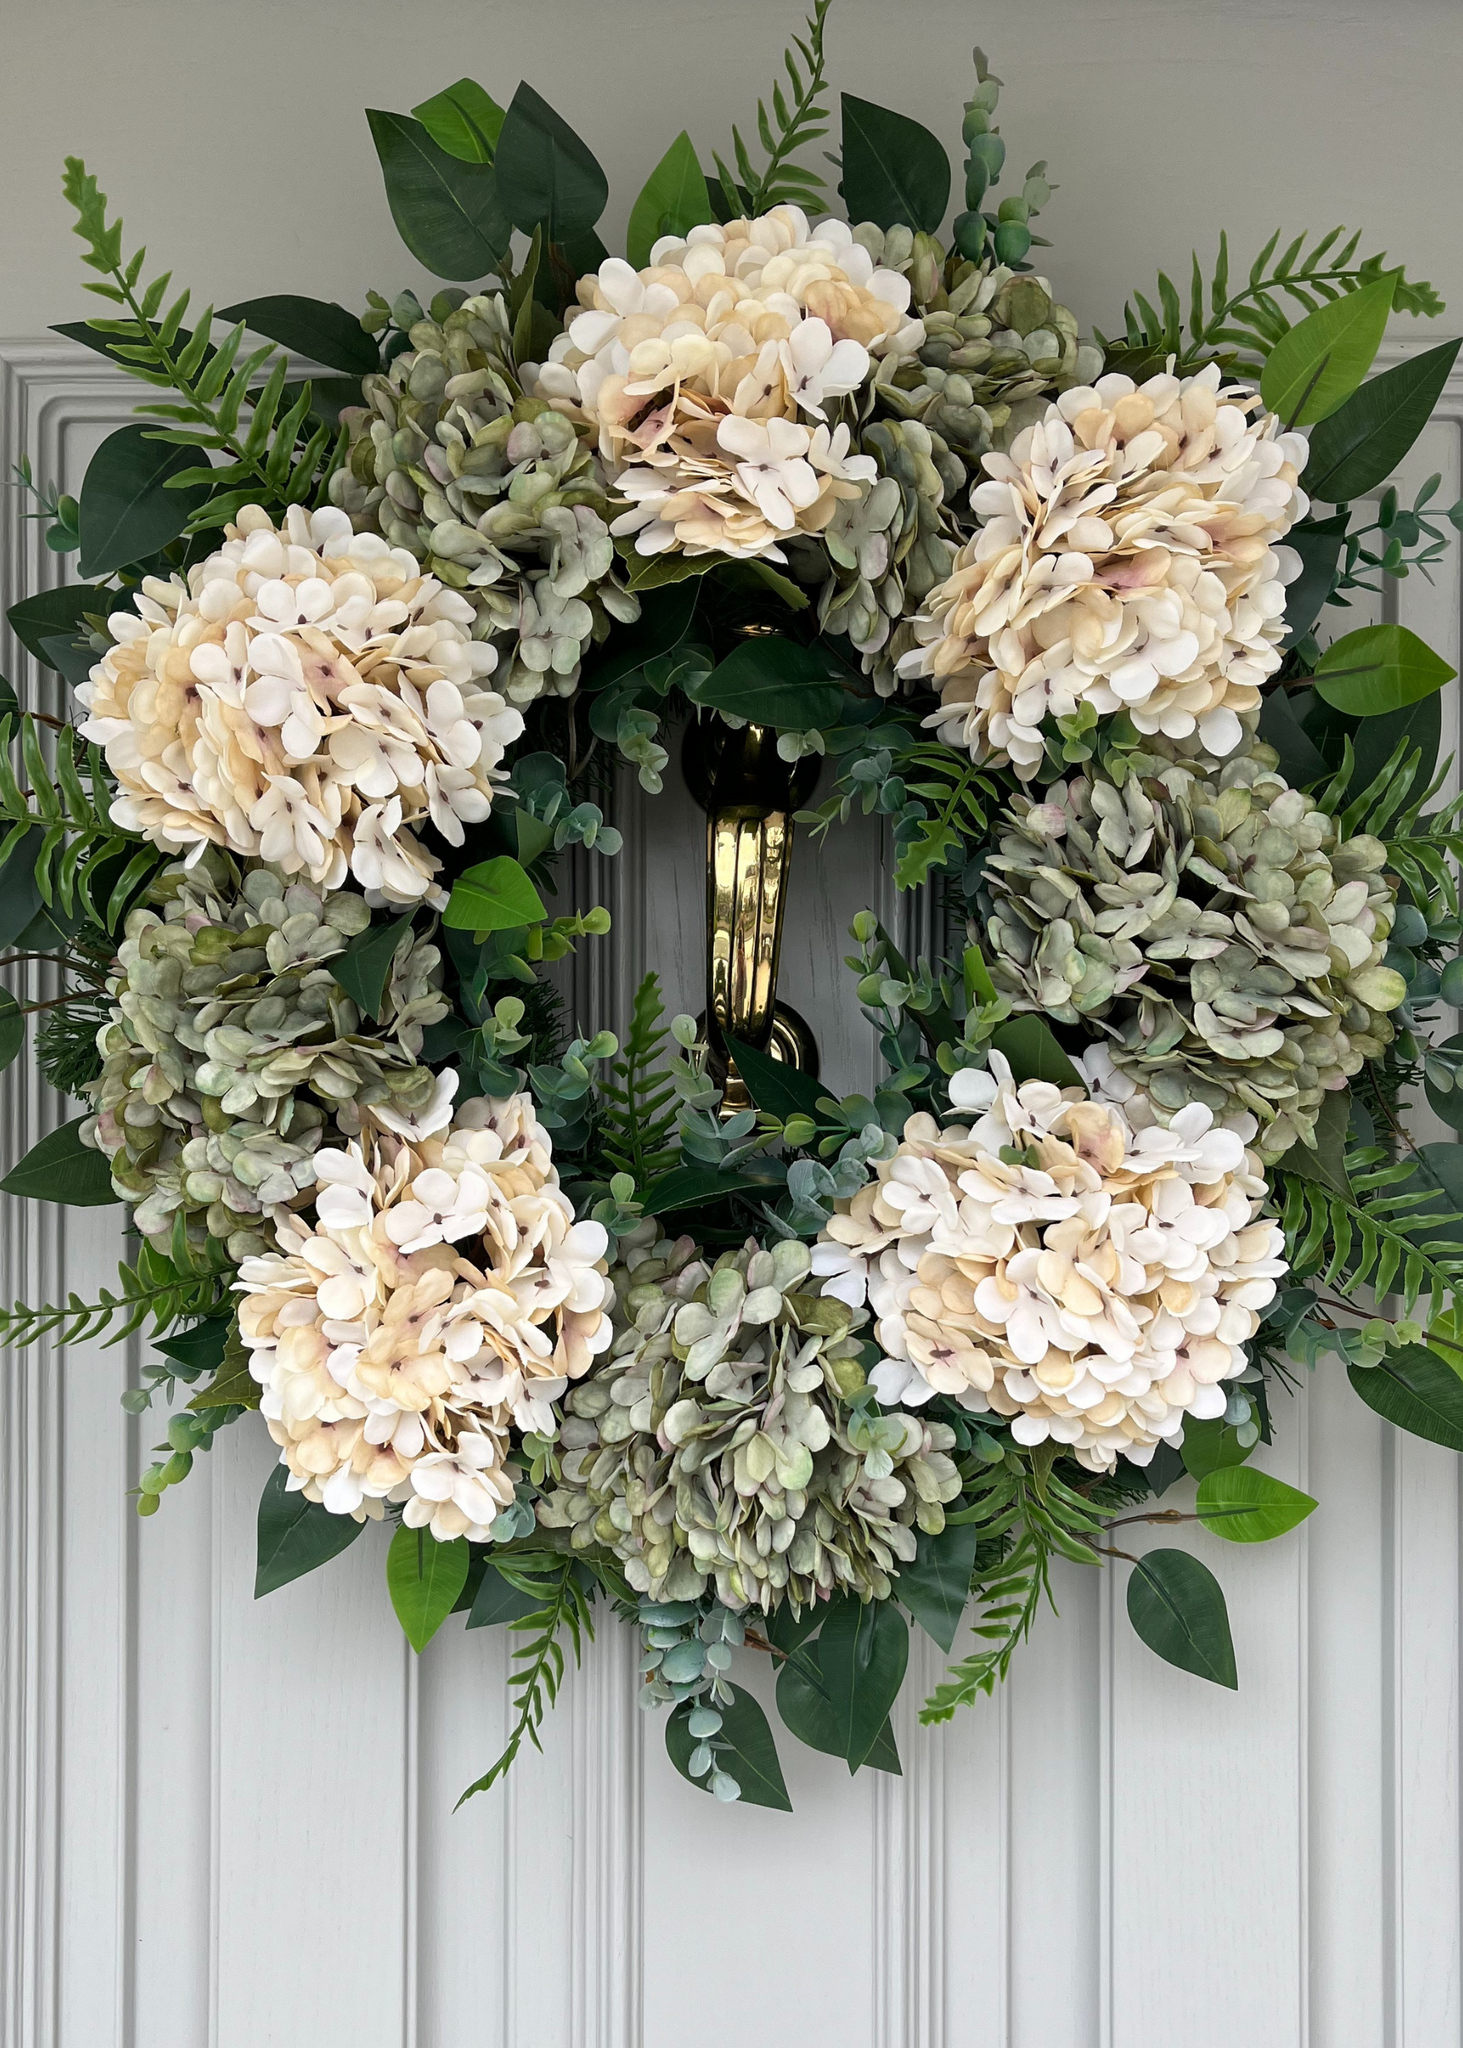 Green and Cream Hydrangea Wreath